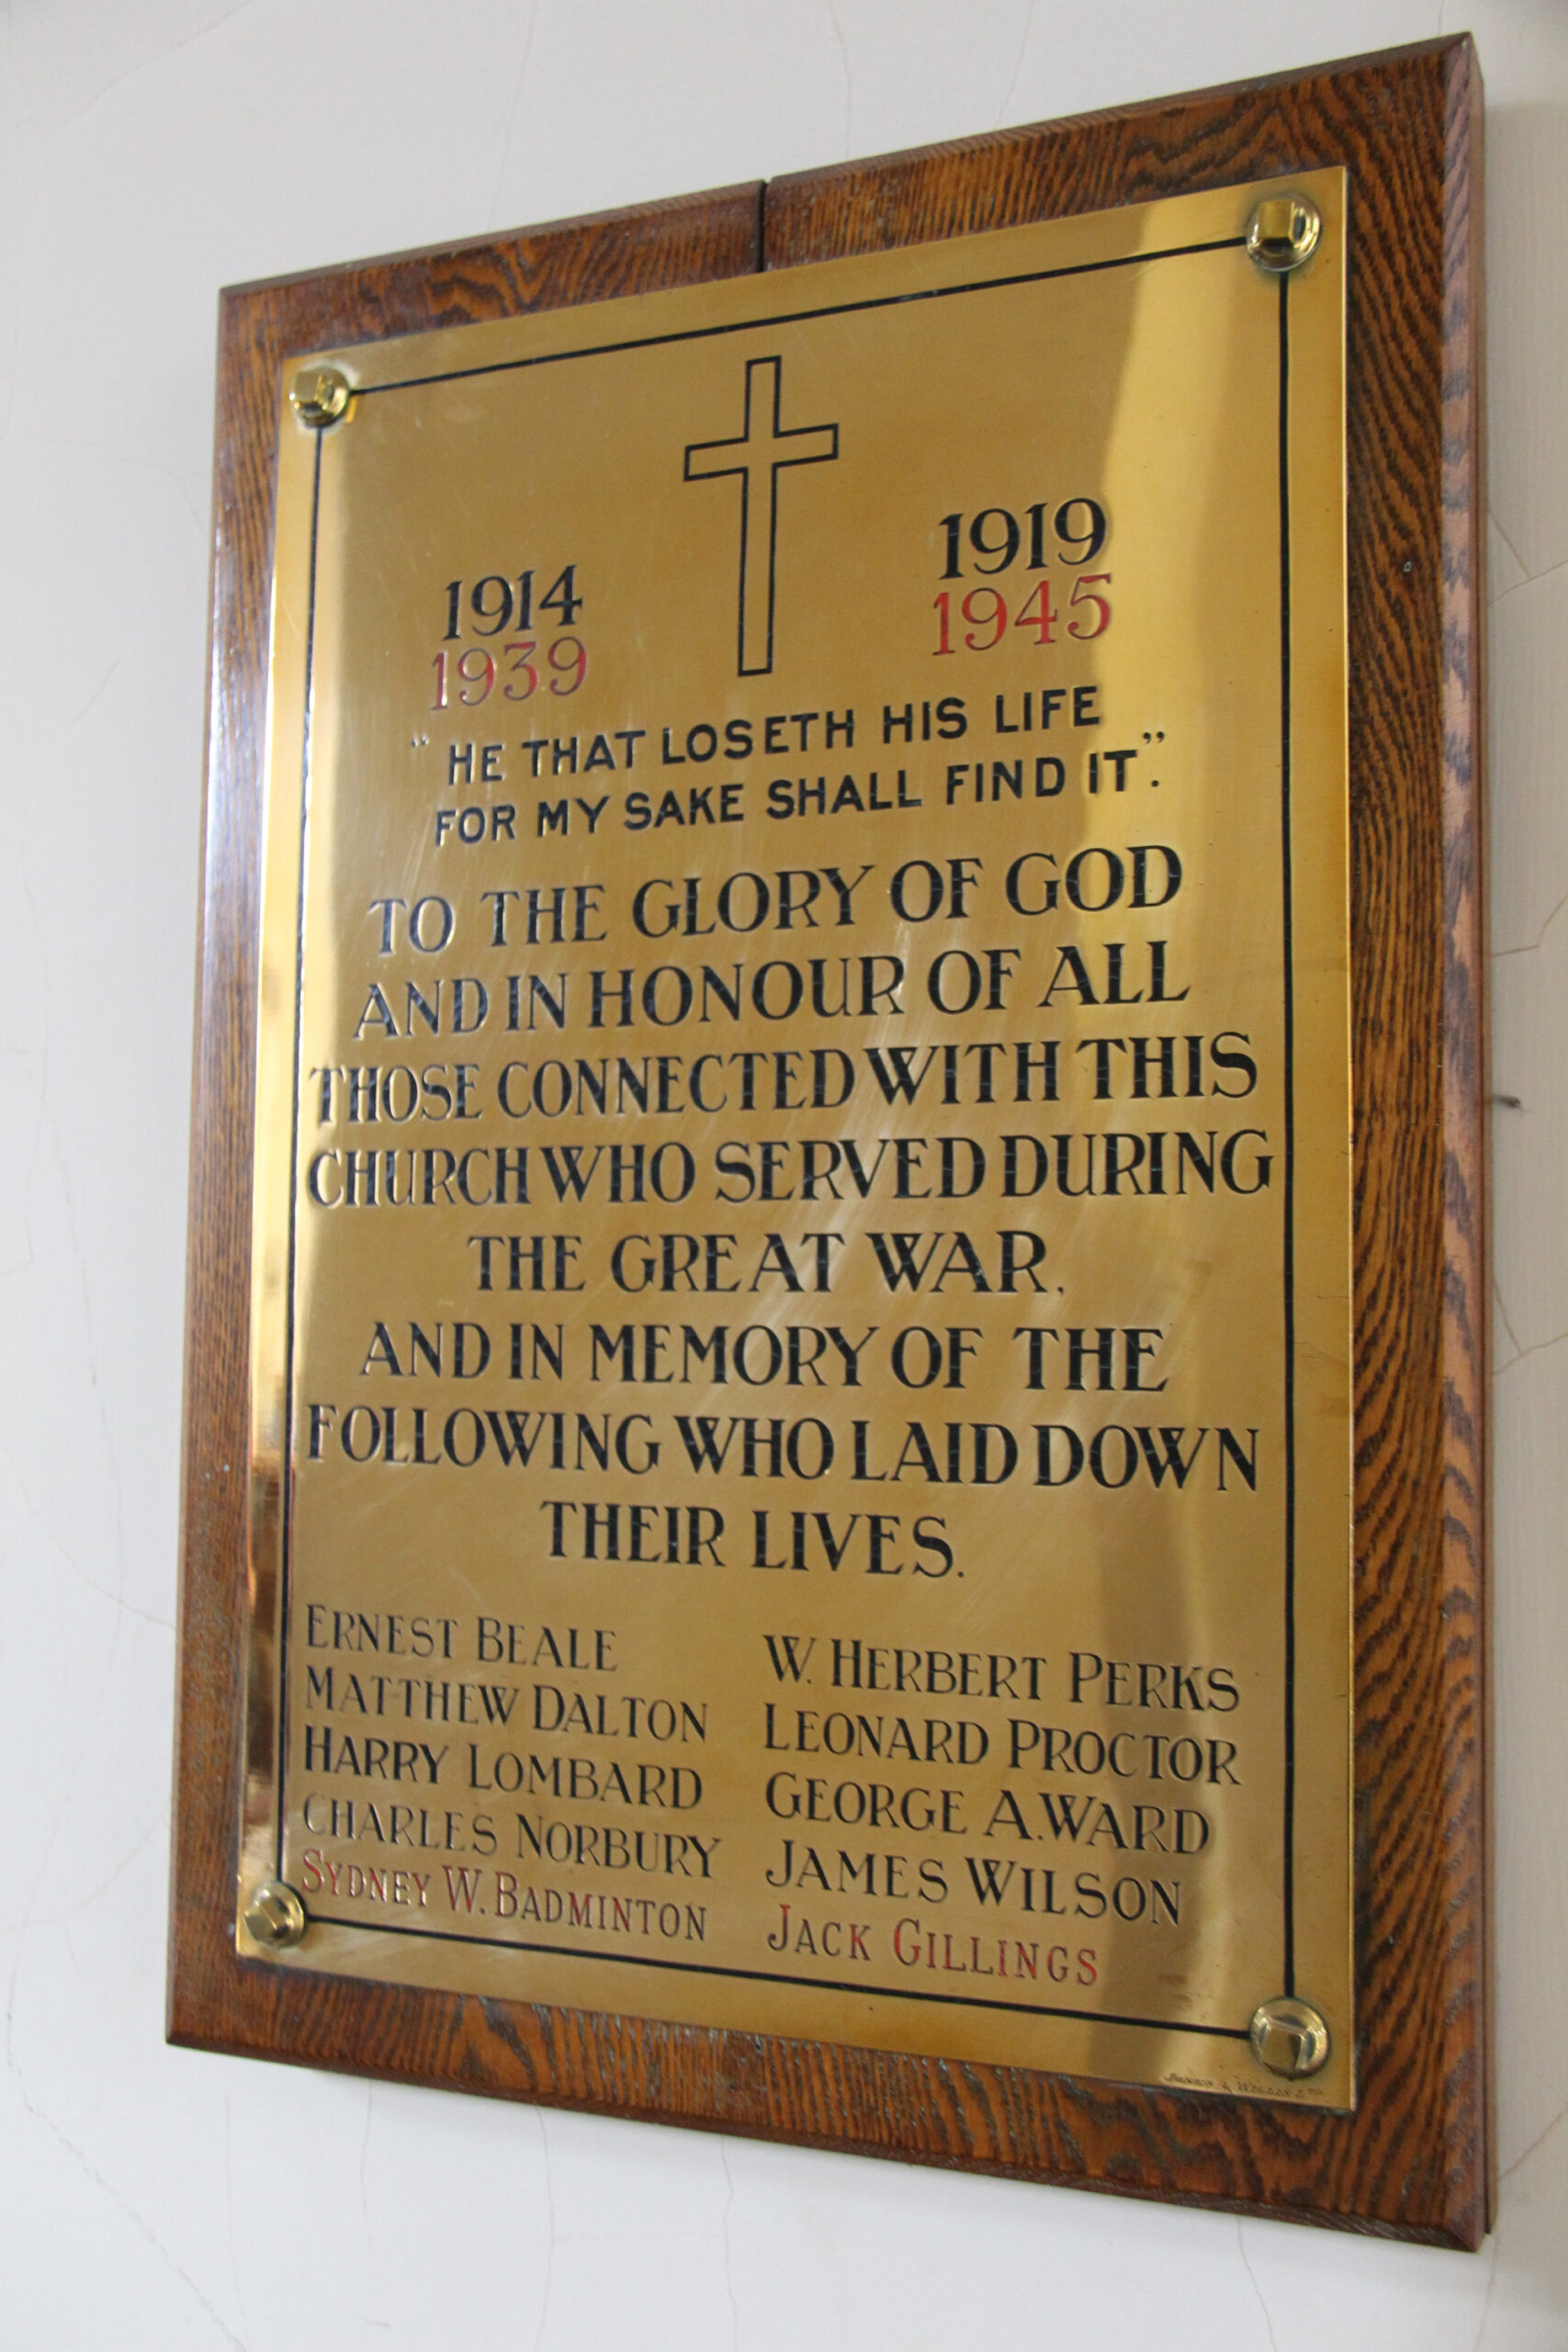 St Pauls Foleshill - memorial plaque